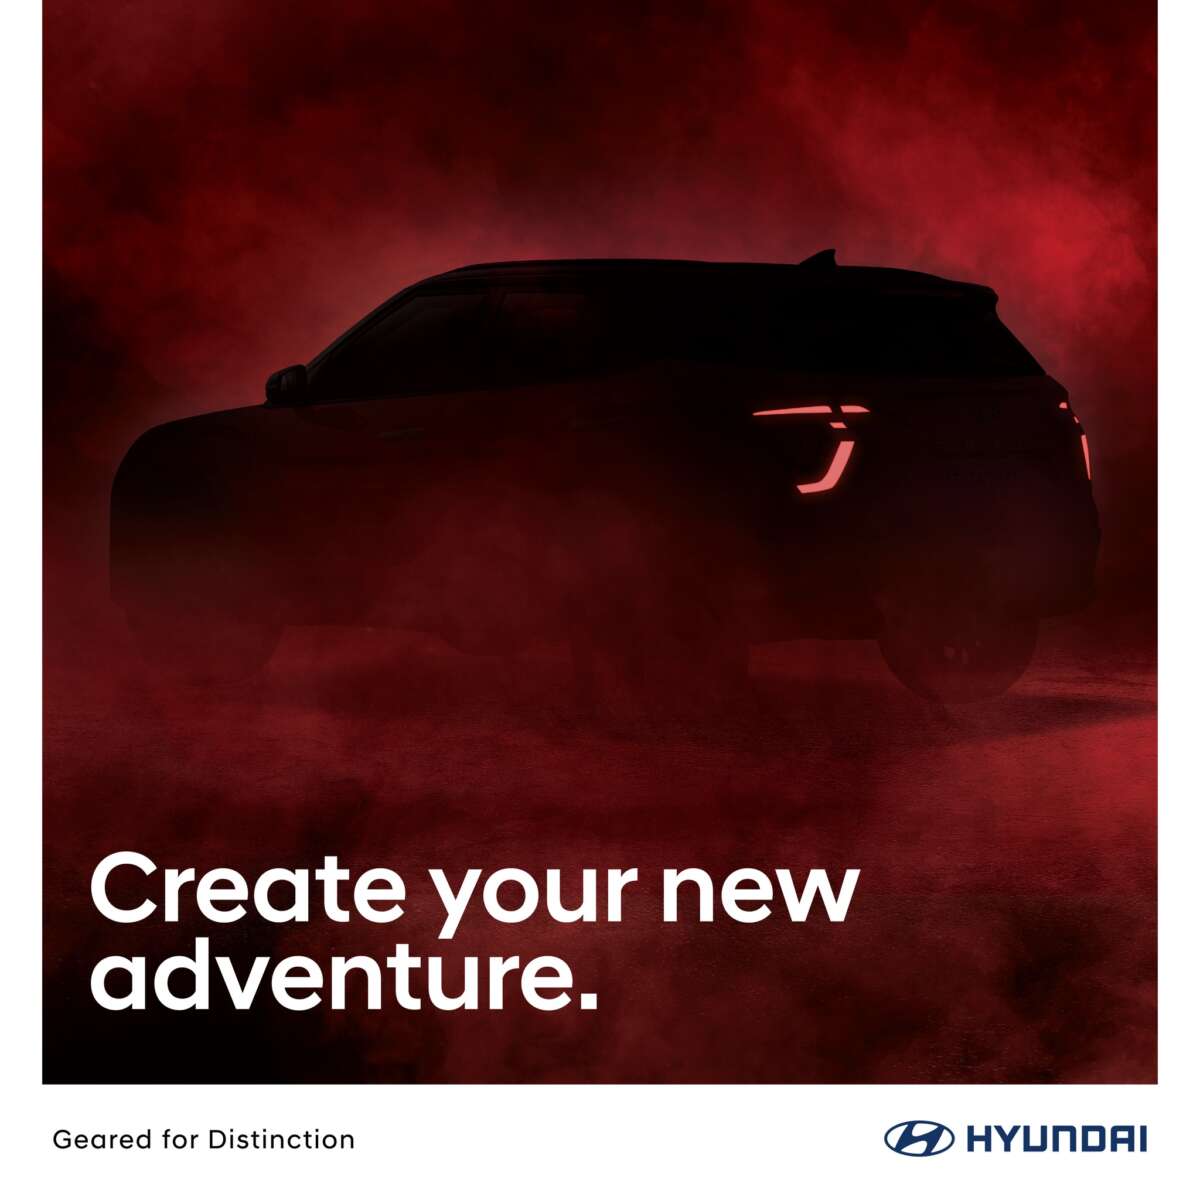 Hyundai Creta Malaysia Teaserbm Paul Tans Automotive News 0541